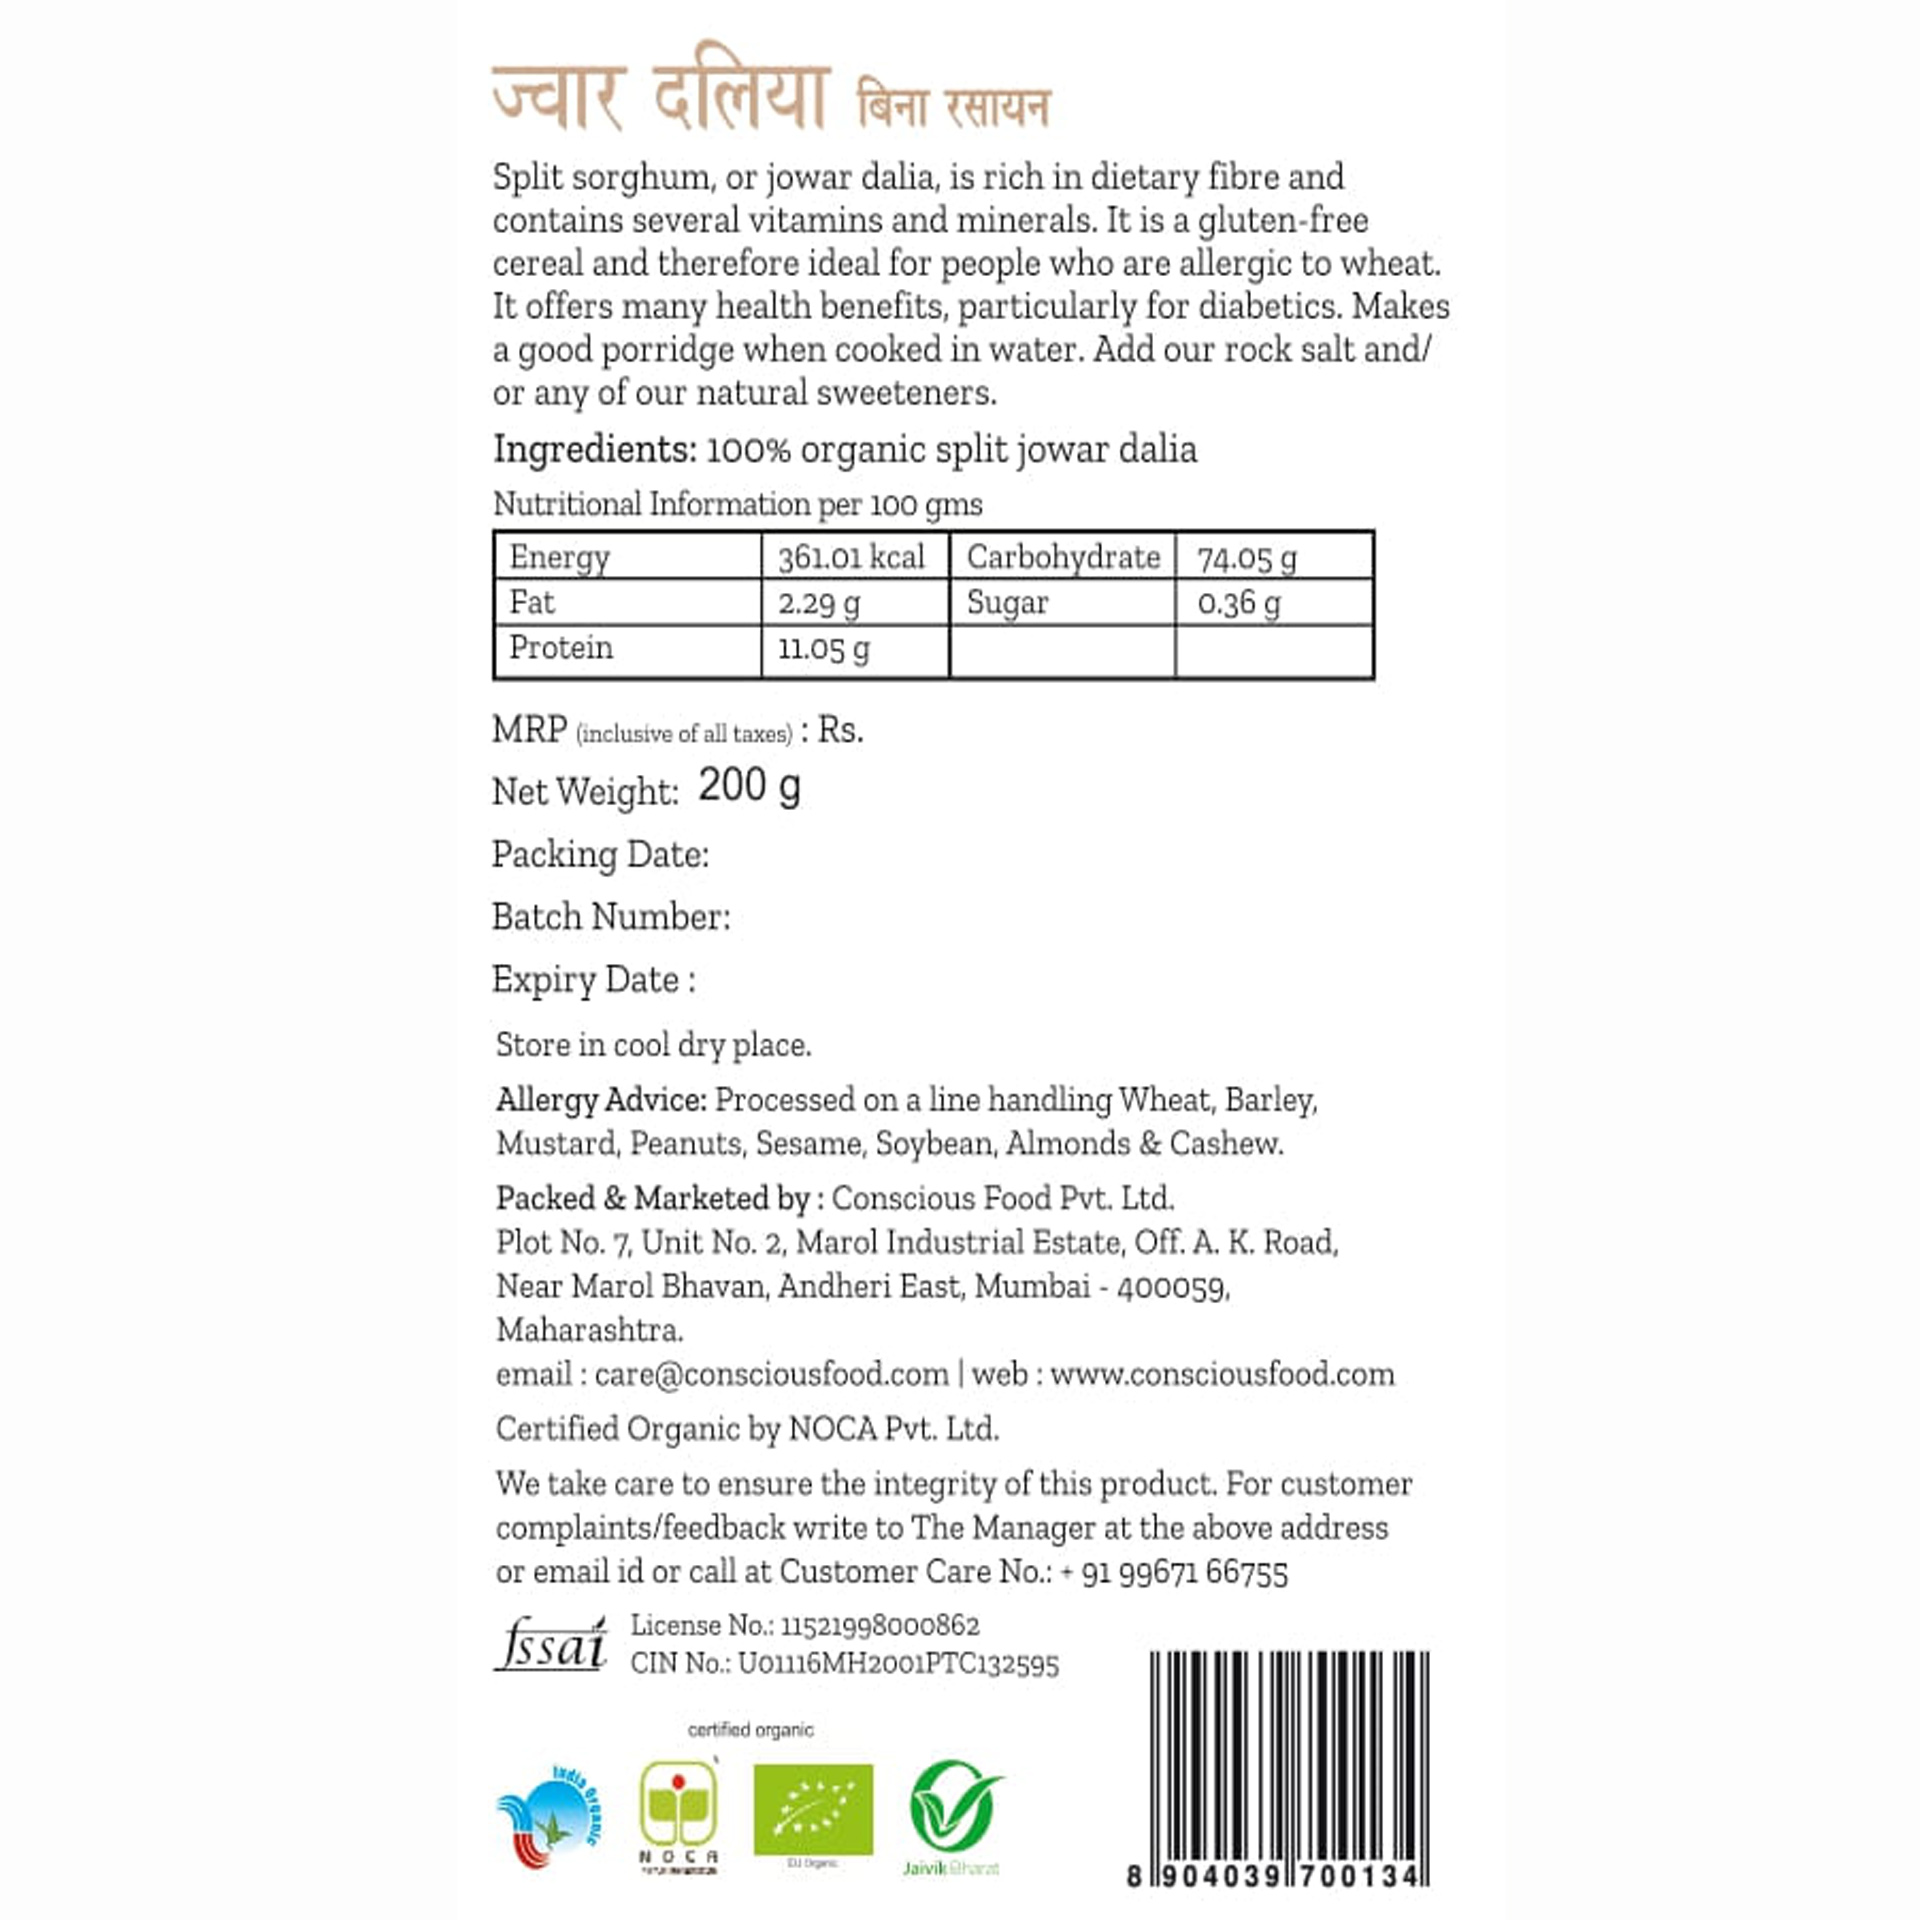 Product: Conscious Food Split Sorghum (Jowar Dalia) 200g